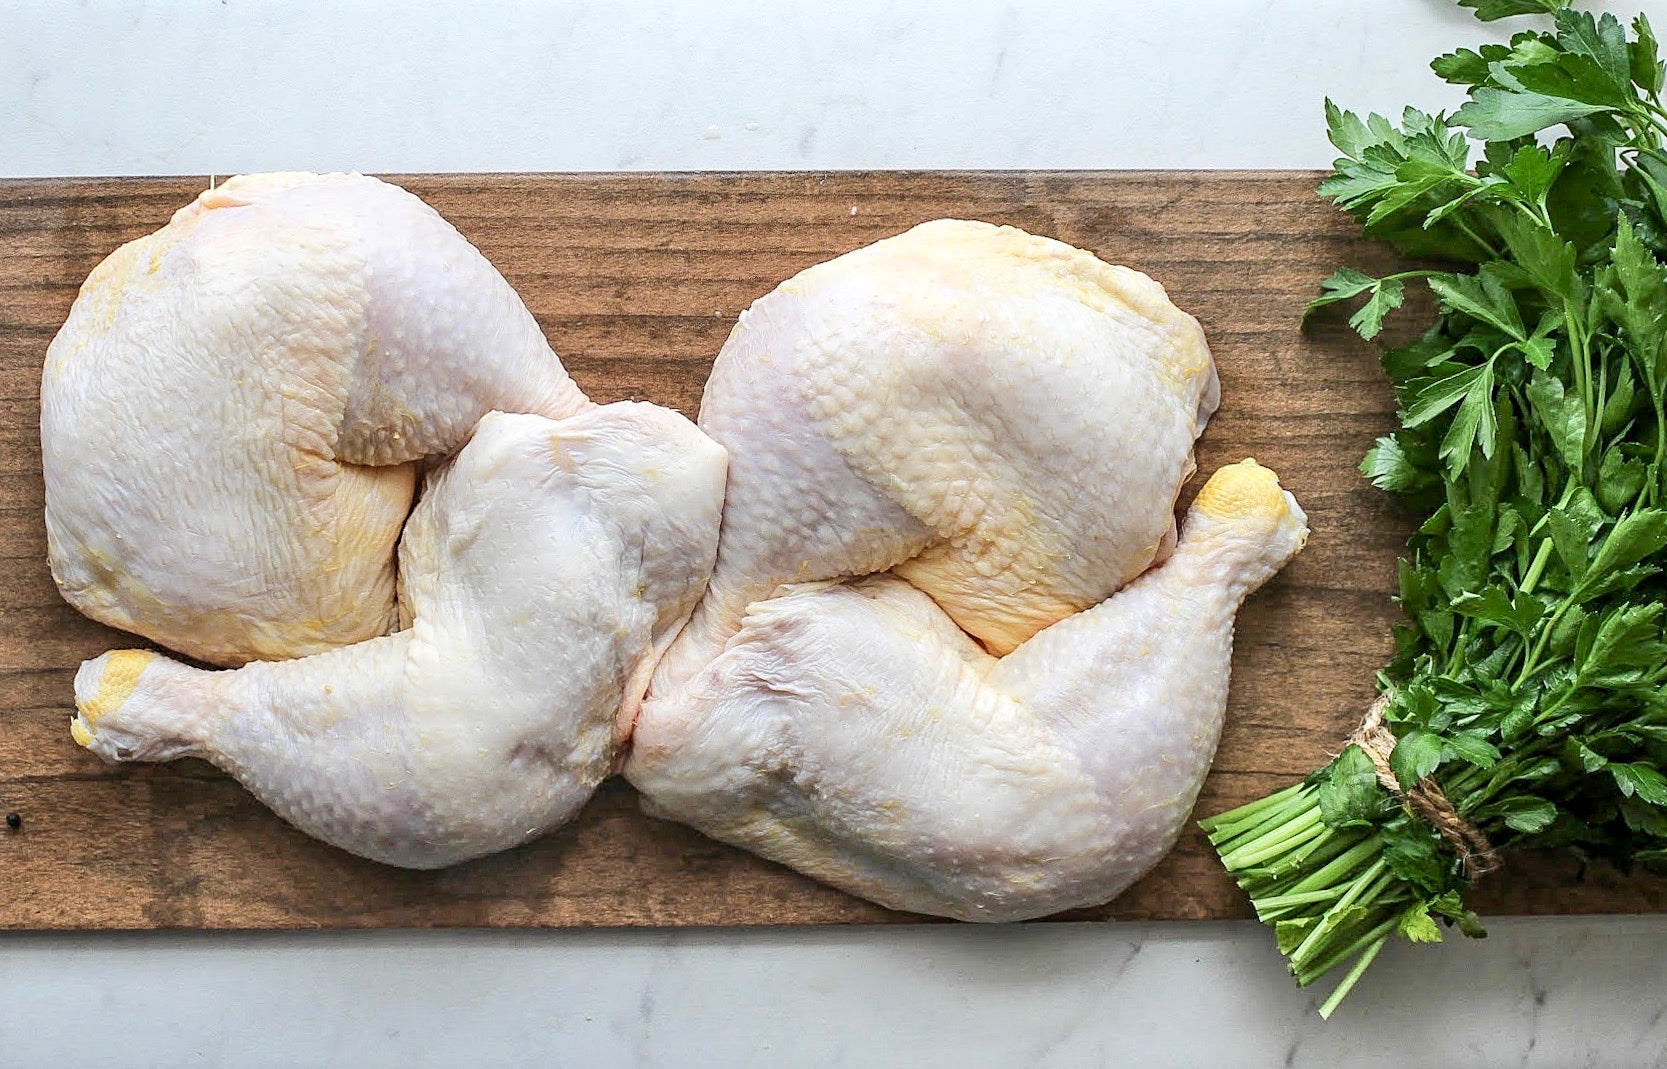 Alabama Organic Pastured Chicken Legs and Thighs. NON-GMO, NO Antibiotic, Soy Free Chicken